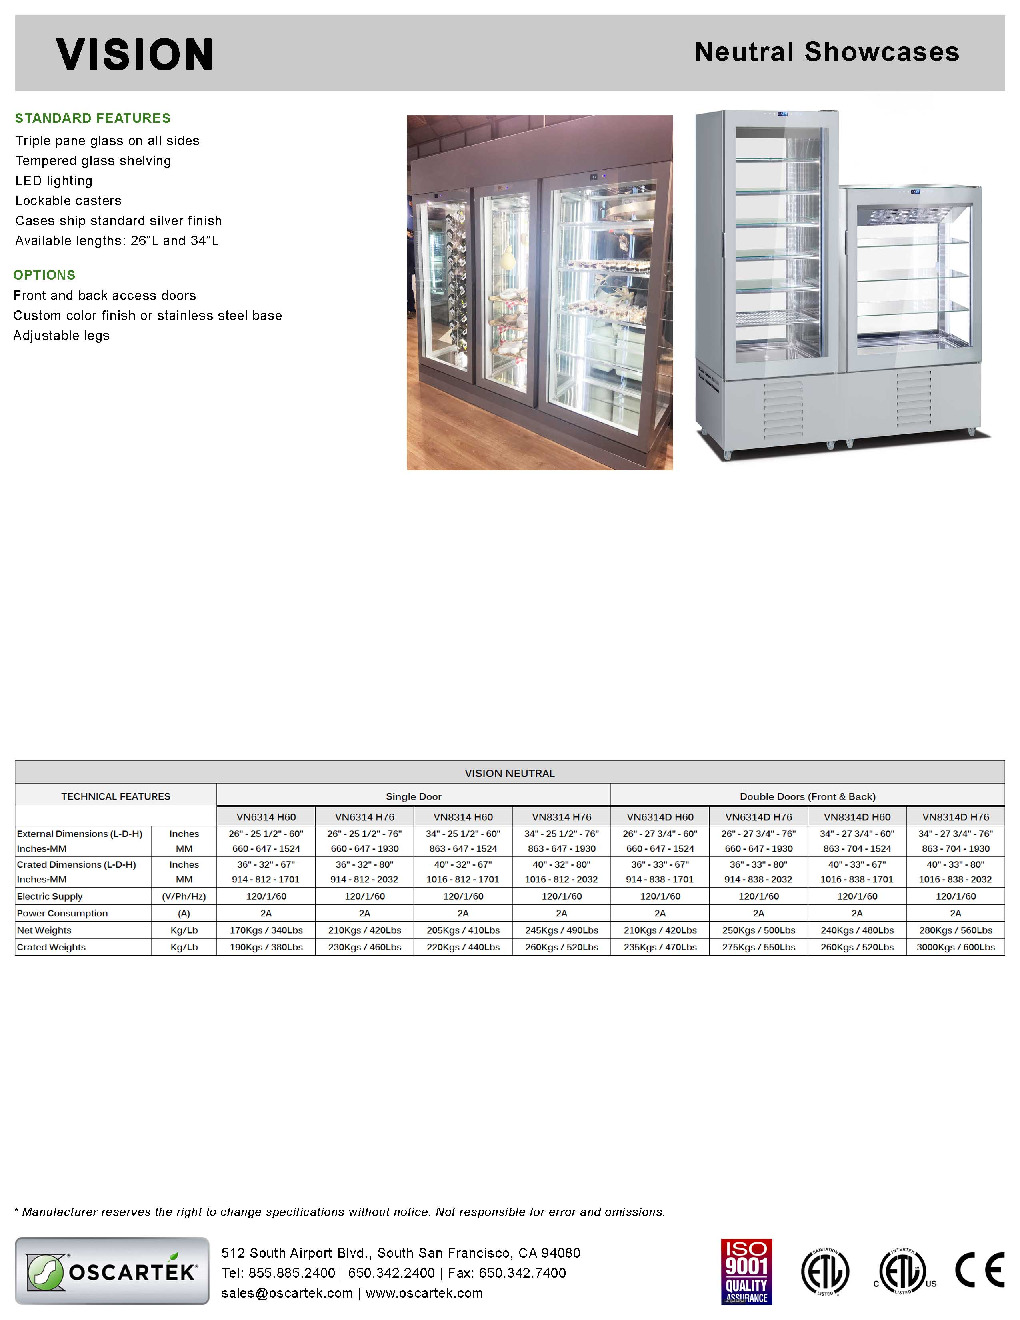 Oscartek VISION VN6314 H60 Non-Refrigerated Bakery Display Case